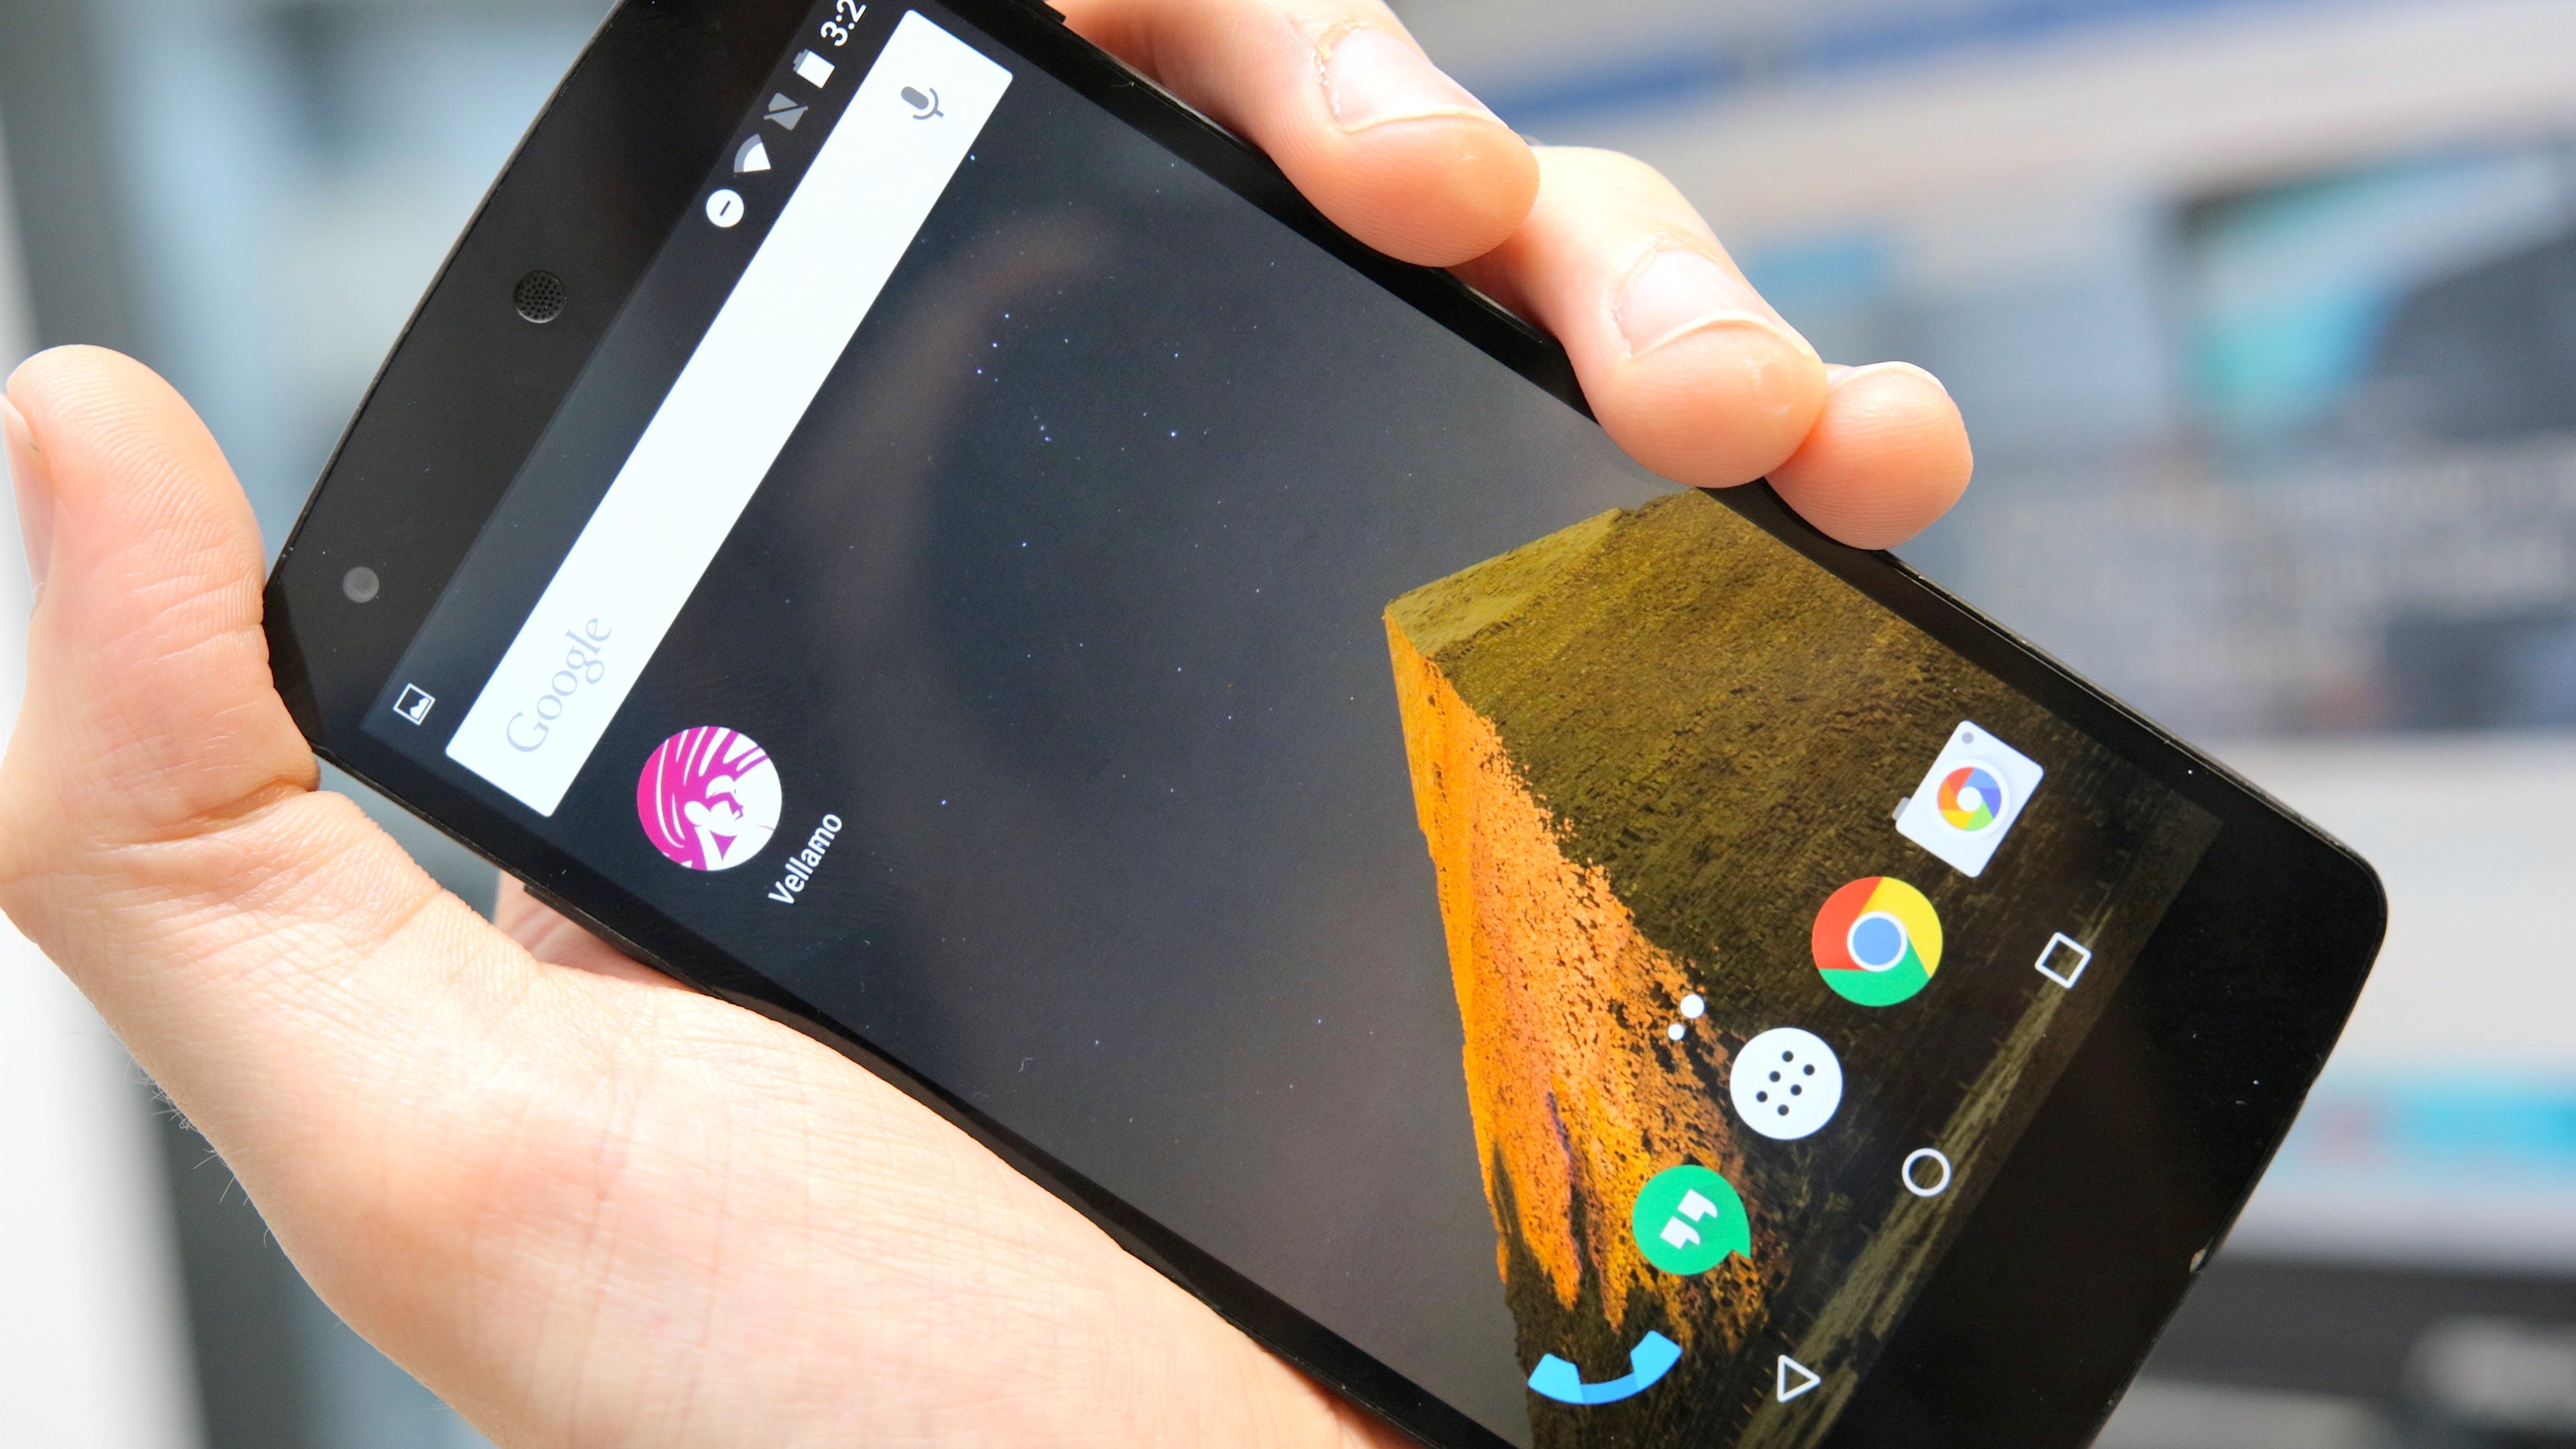 Nexus 5 Marshmallow Hd Wallpaper Backgrounds Download